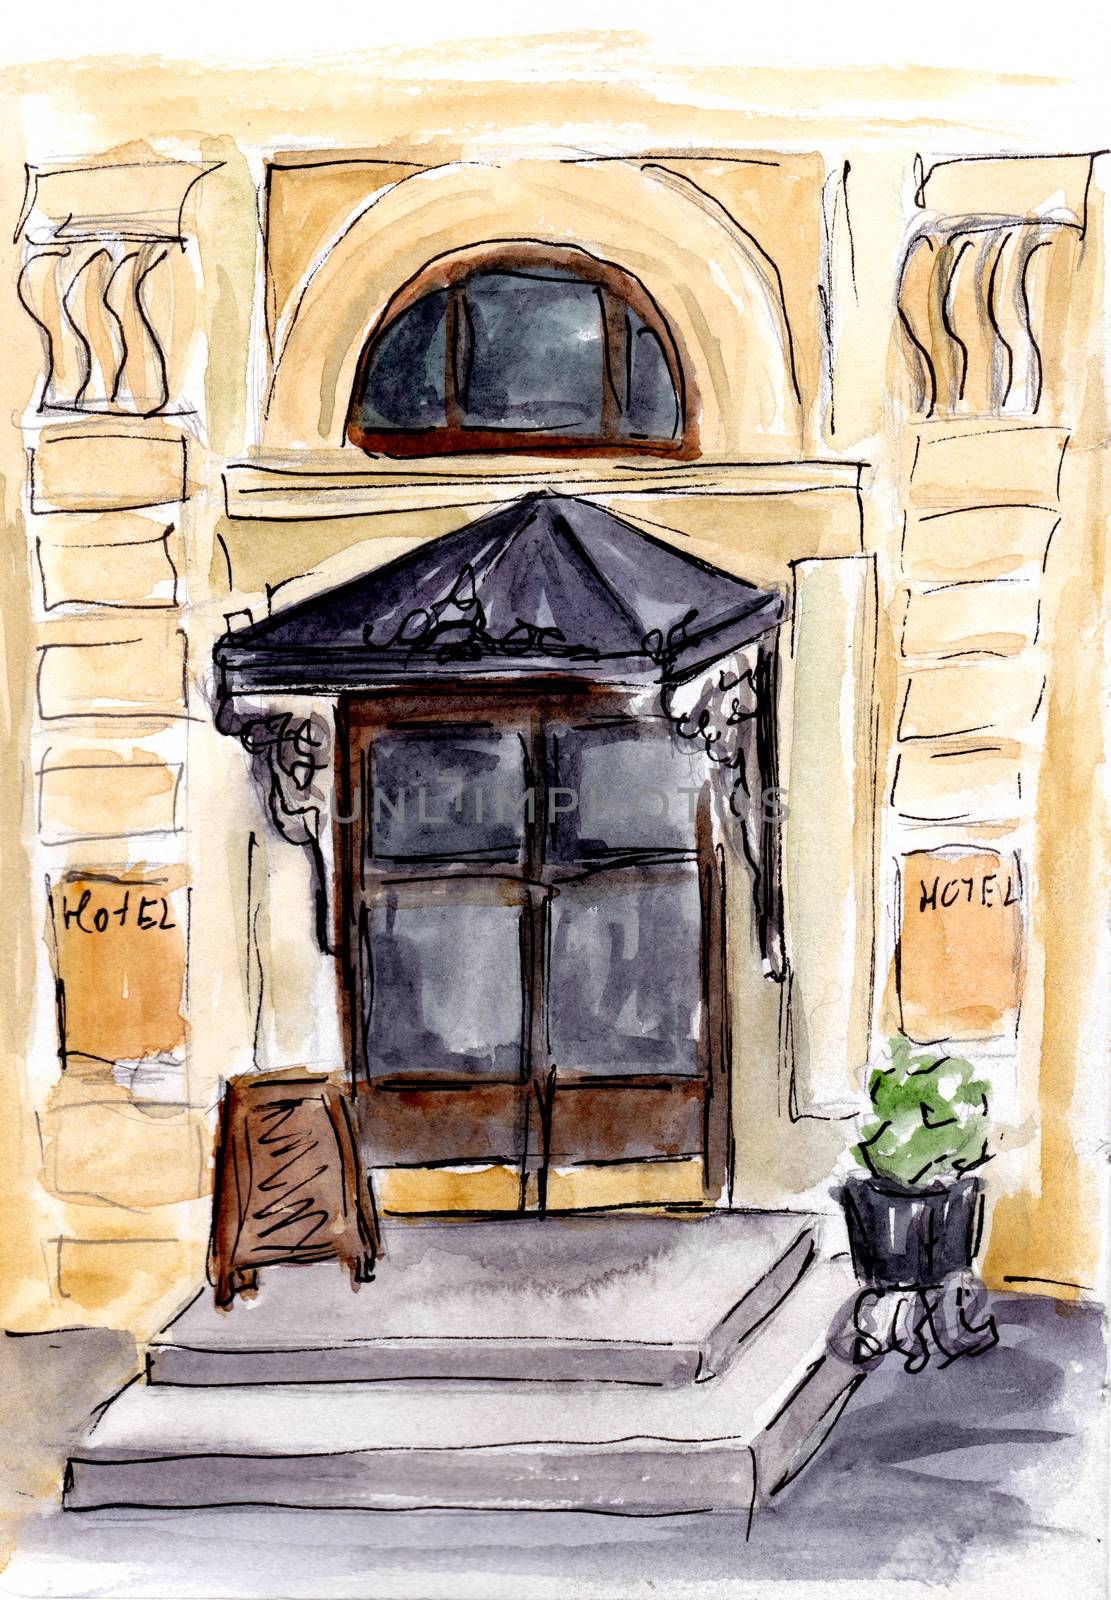 Watercolor sketch of Hotel doorway. Hand-drawn illustration by sshisshka